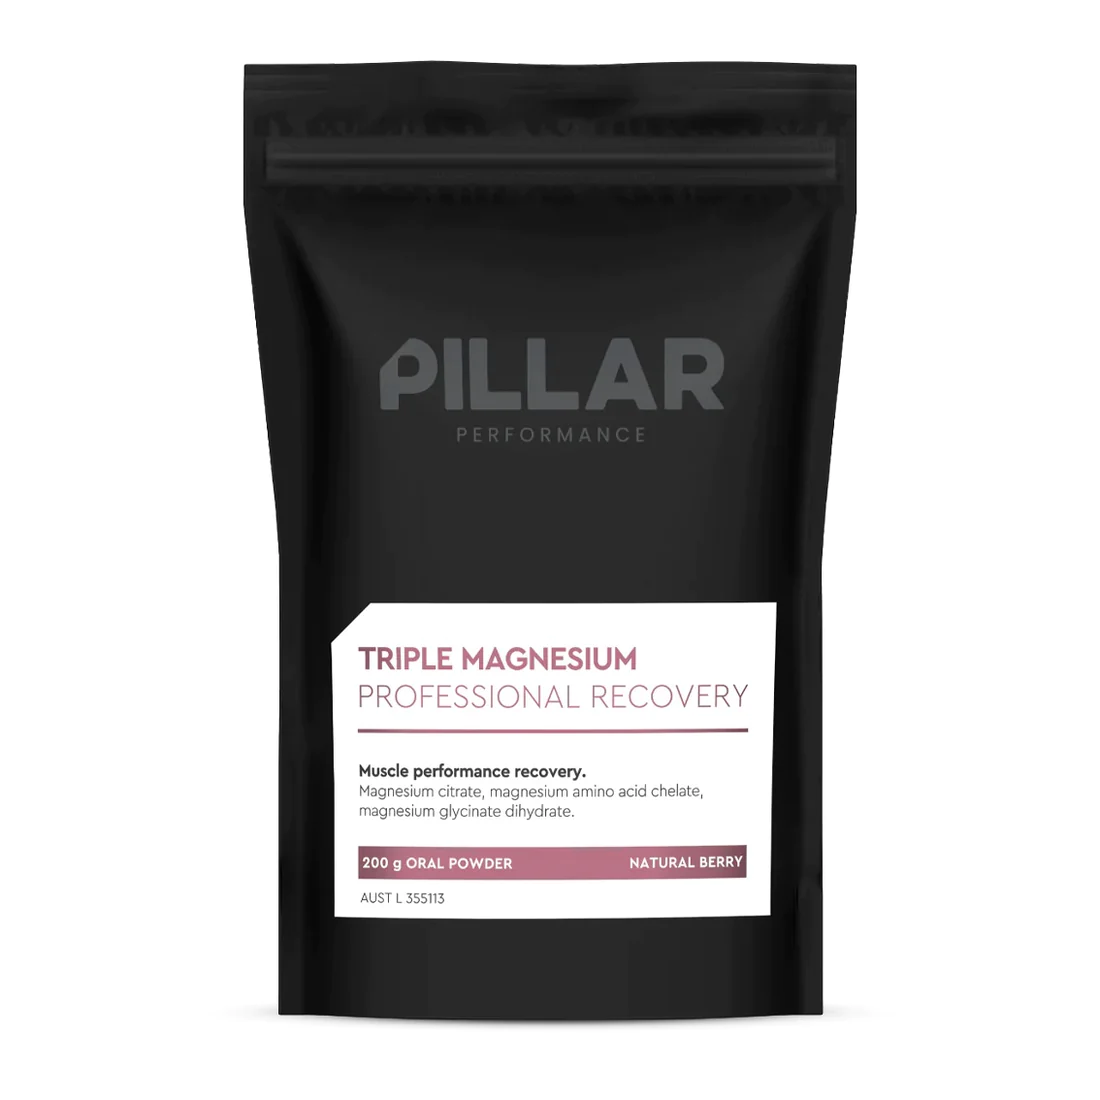 PILLAR Performance Triple Magnesium Powder Pouch - Natural Berry